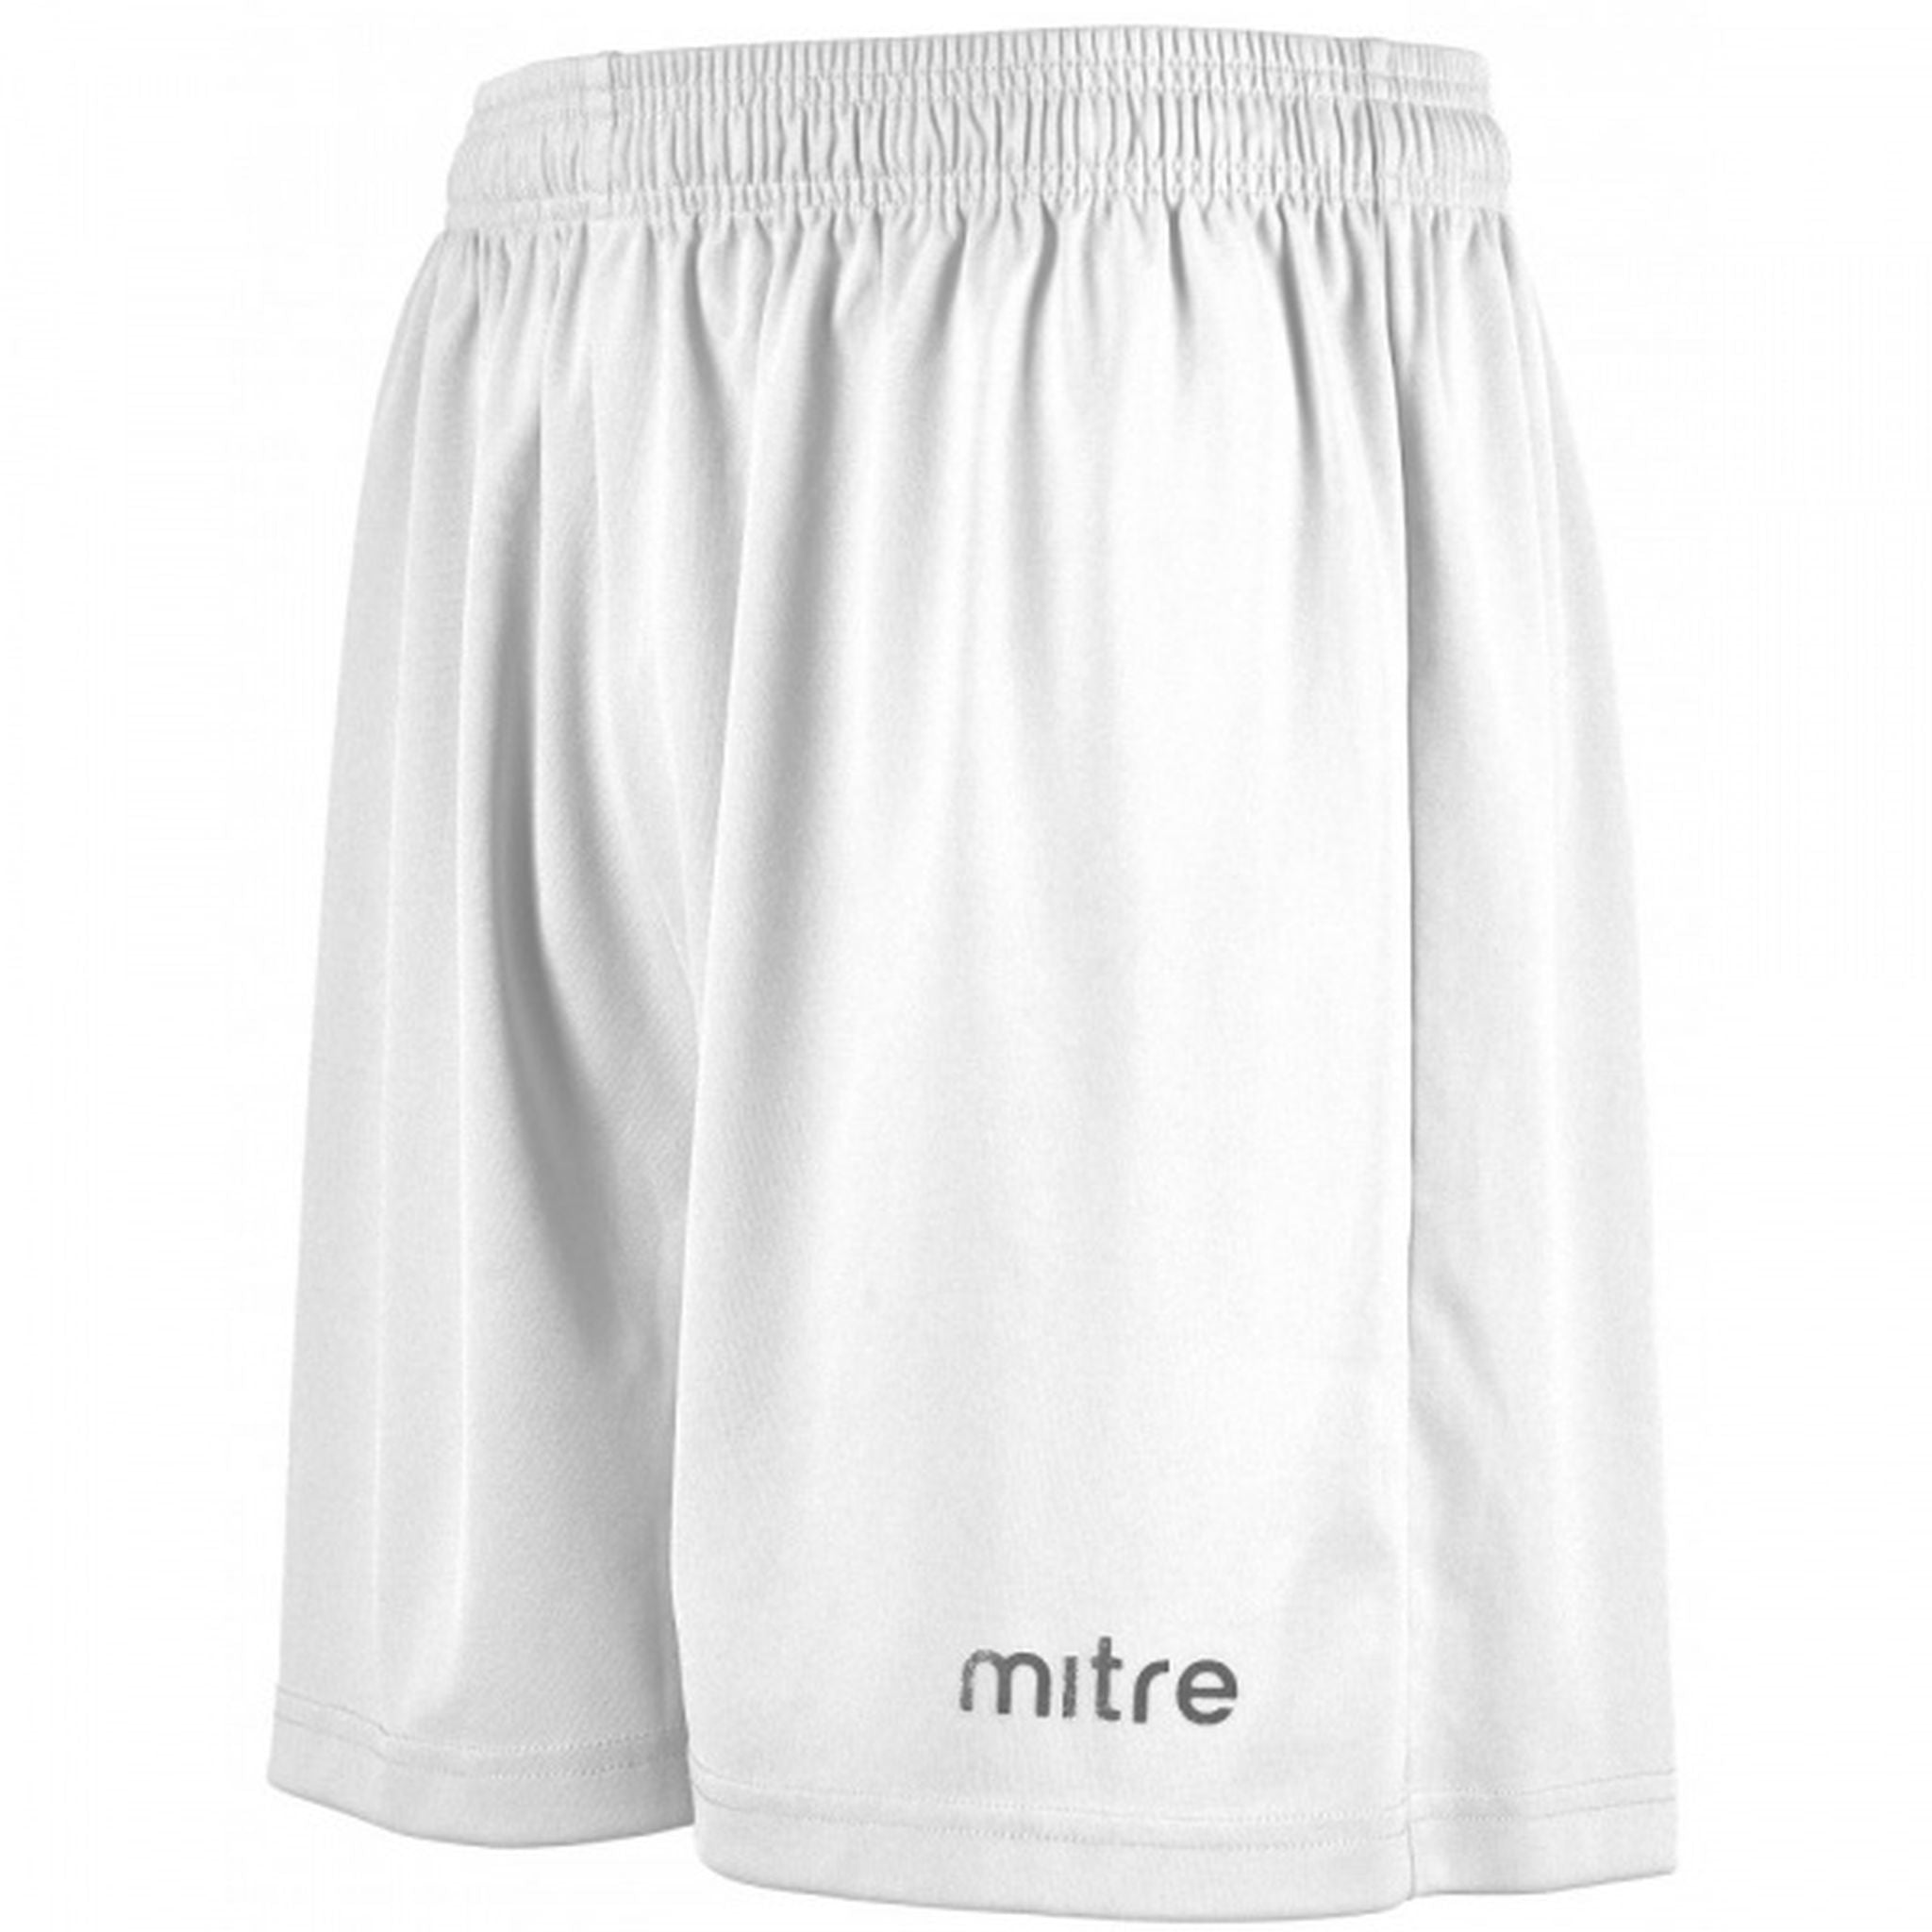 Mire Metric Soccer Shorts